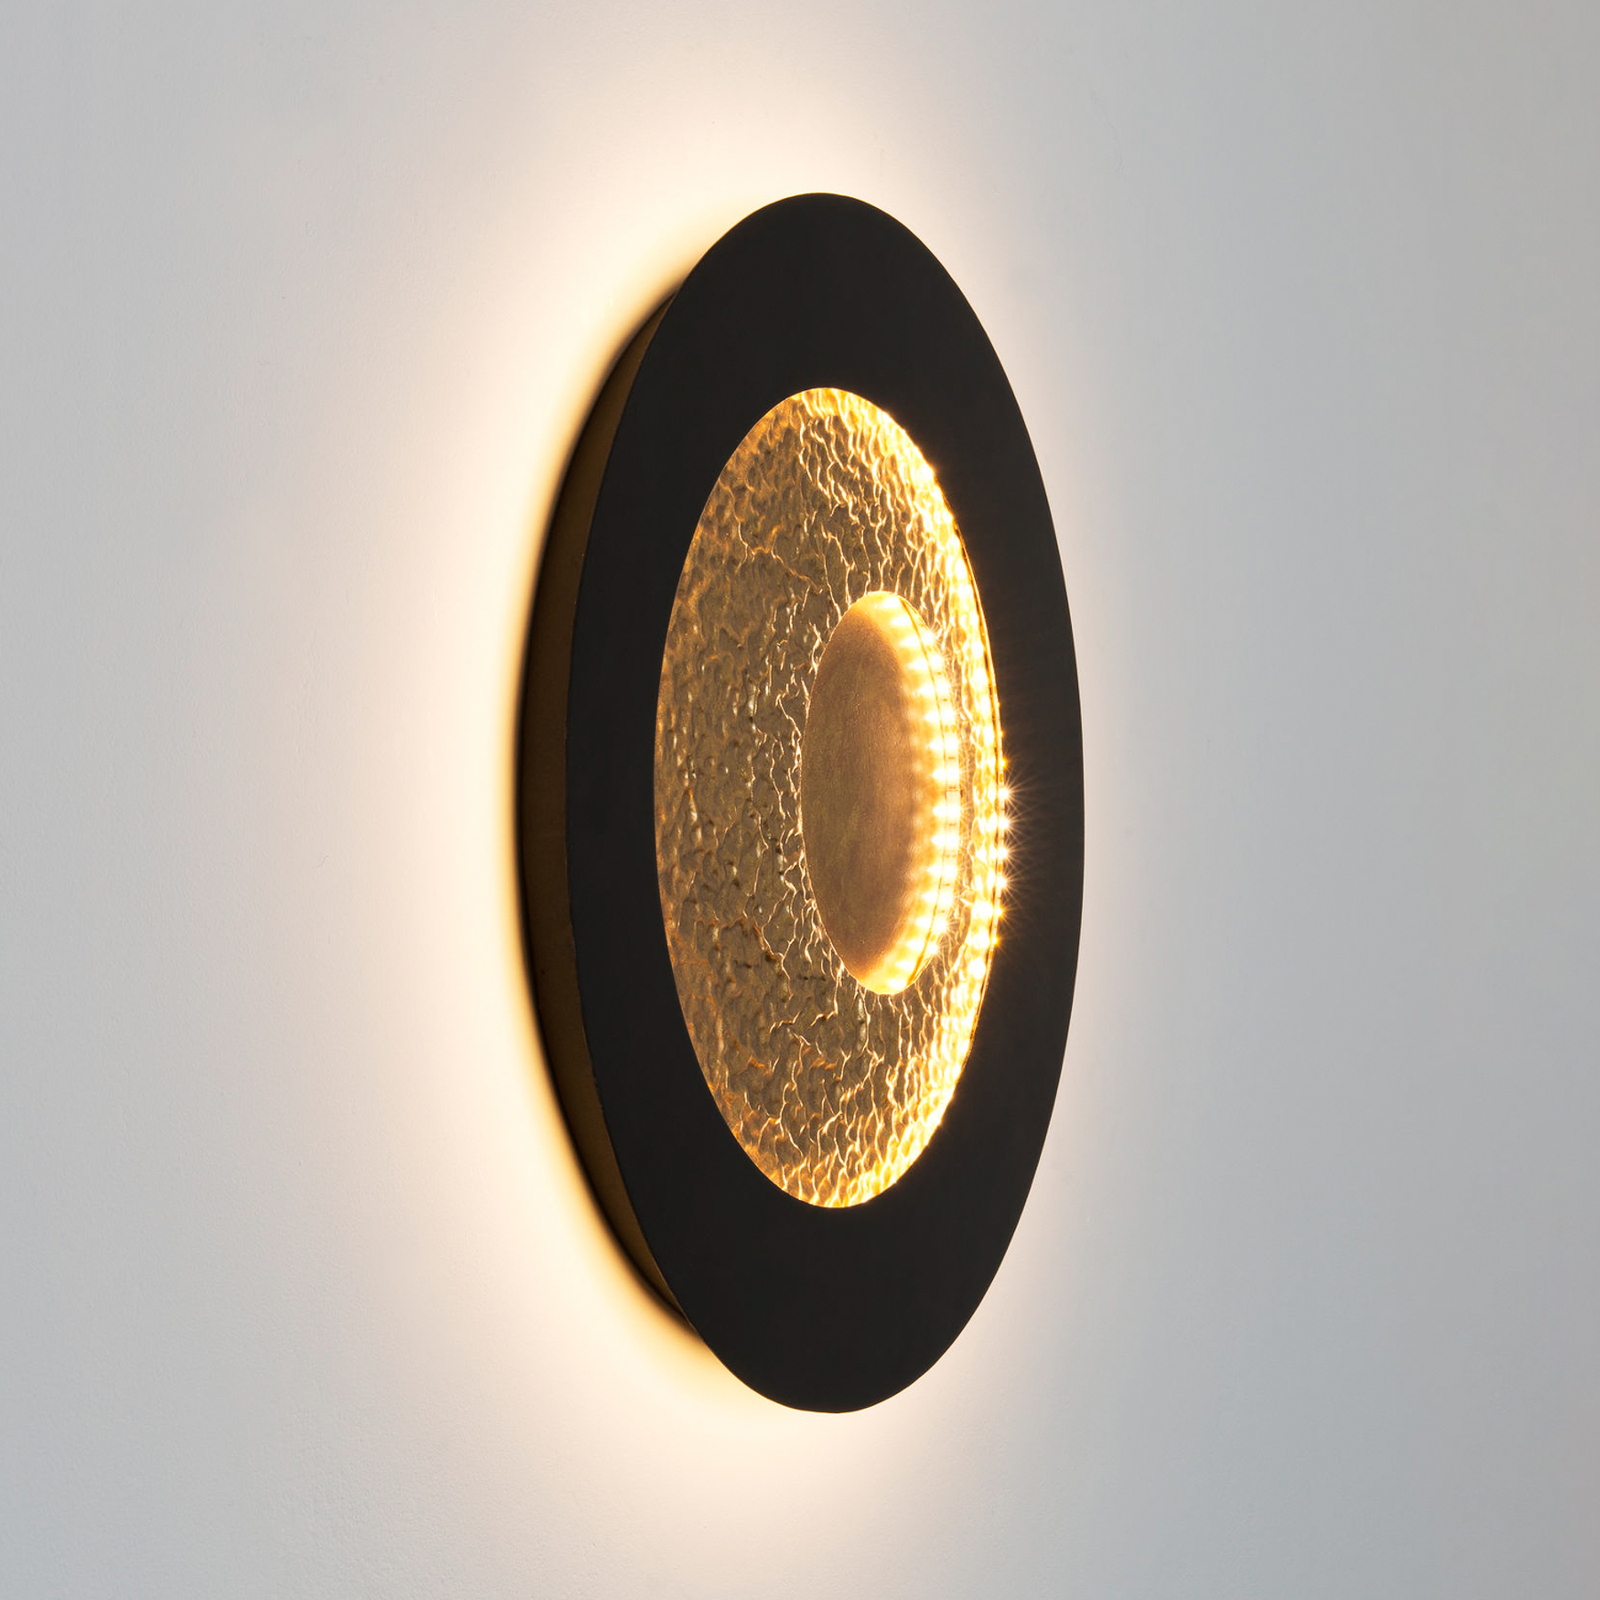 Urano LED-es fali lámpa, barna-fekete/arany, Ø 60 cm, vas